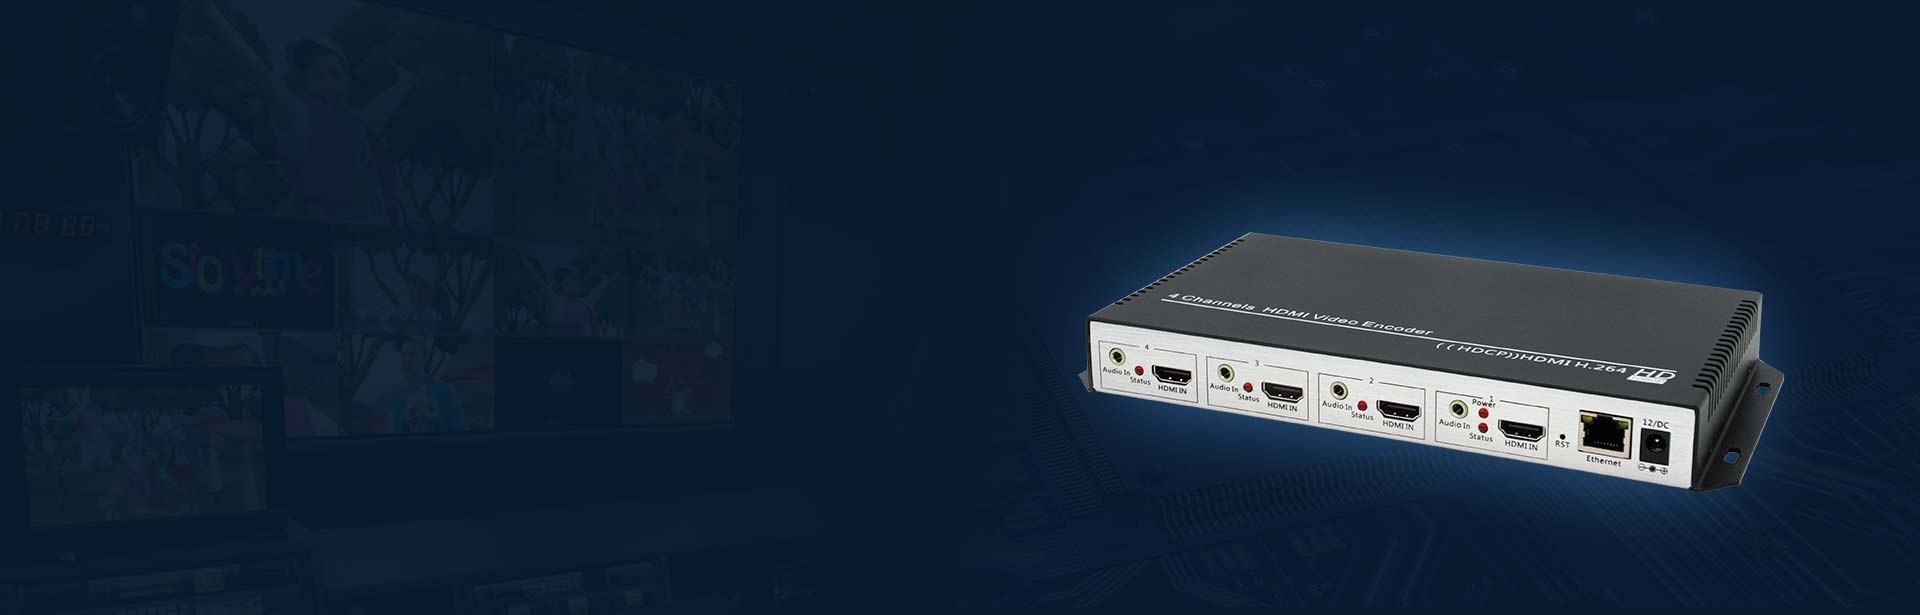 4 Channels 4K HDMI Video Encoder For  IPTV, Live Stream, Broadcast